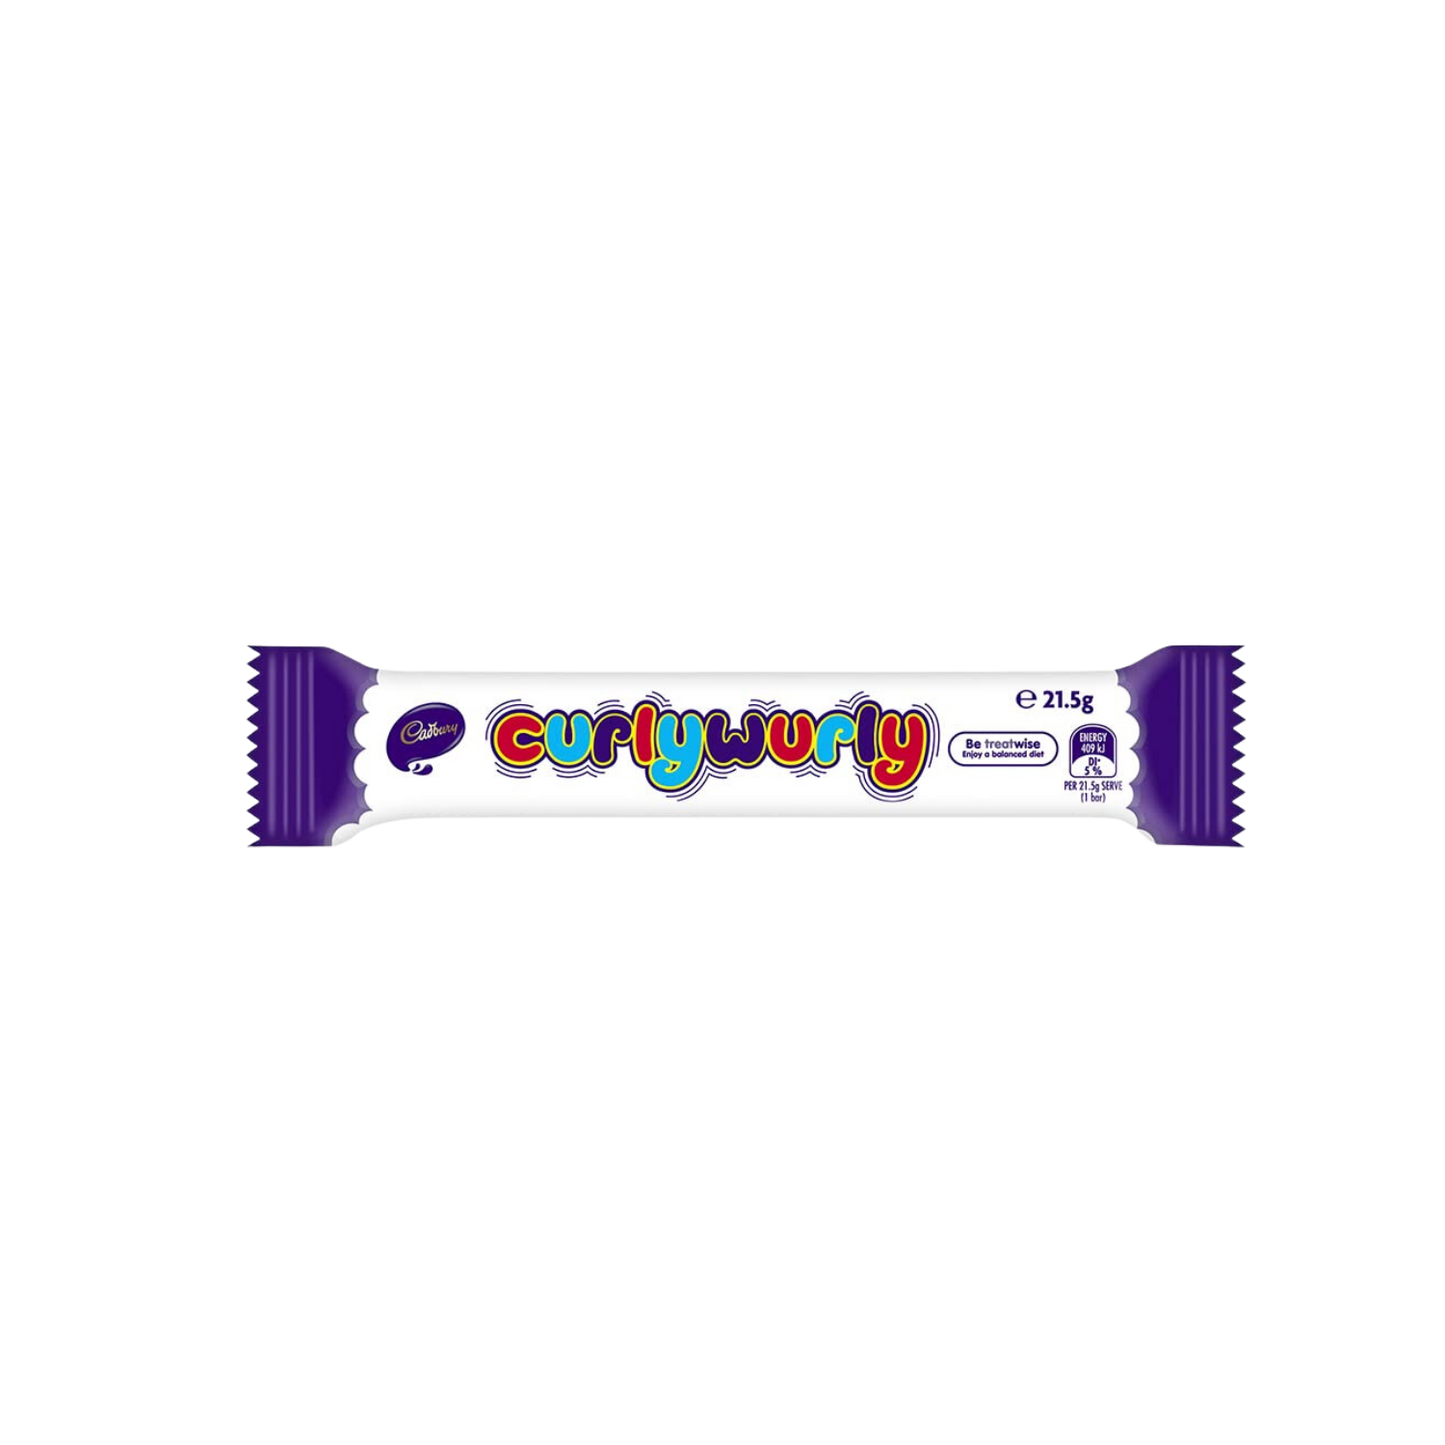 Cadburys Curly Wurly (21.5g)